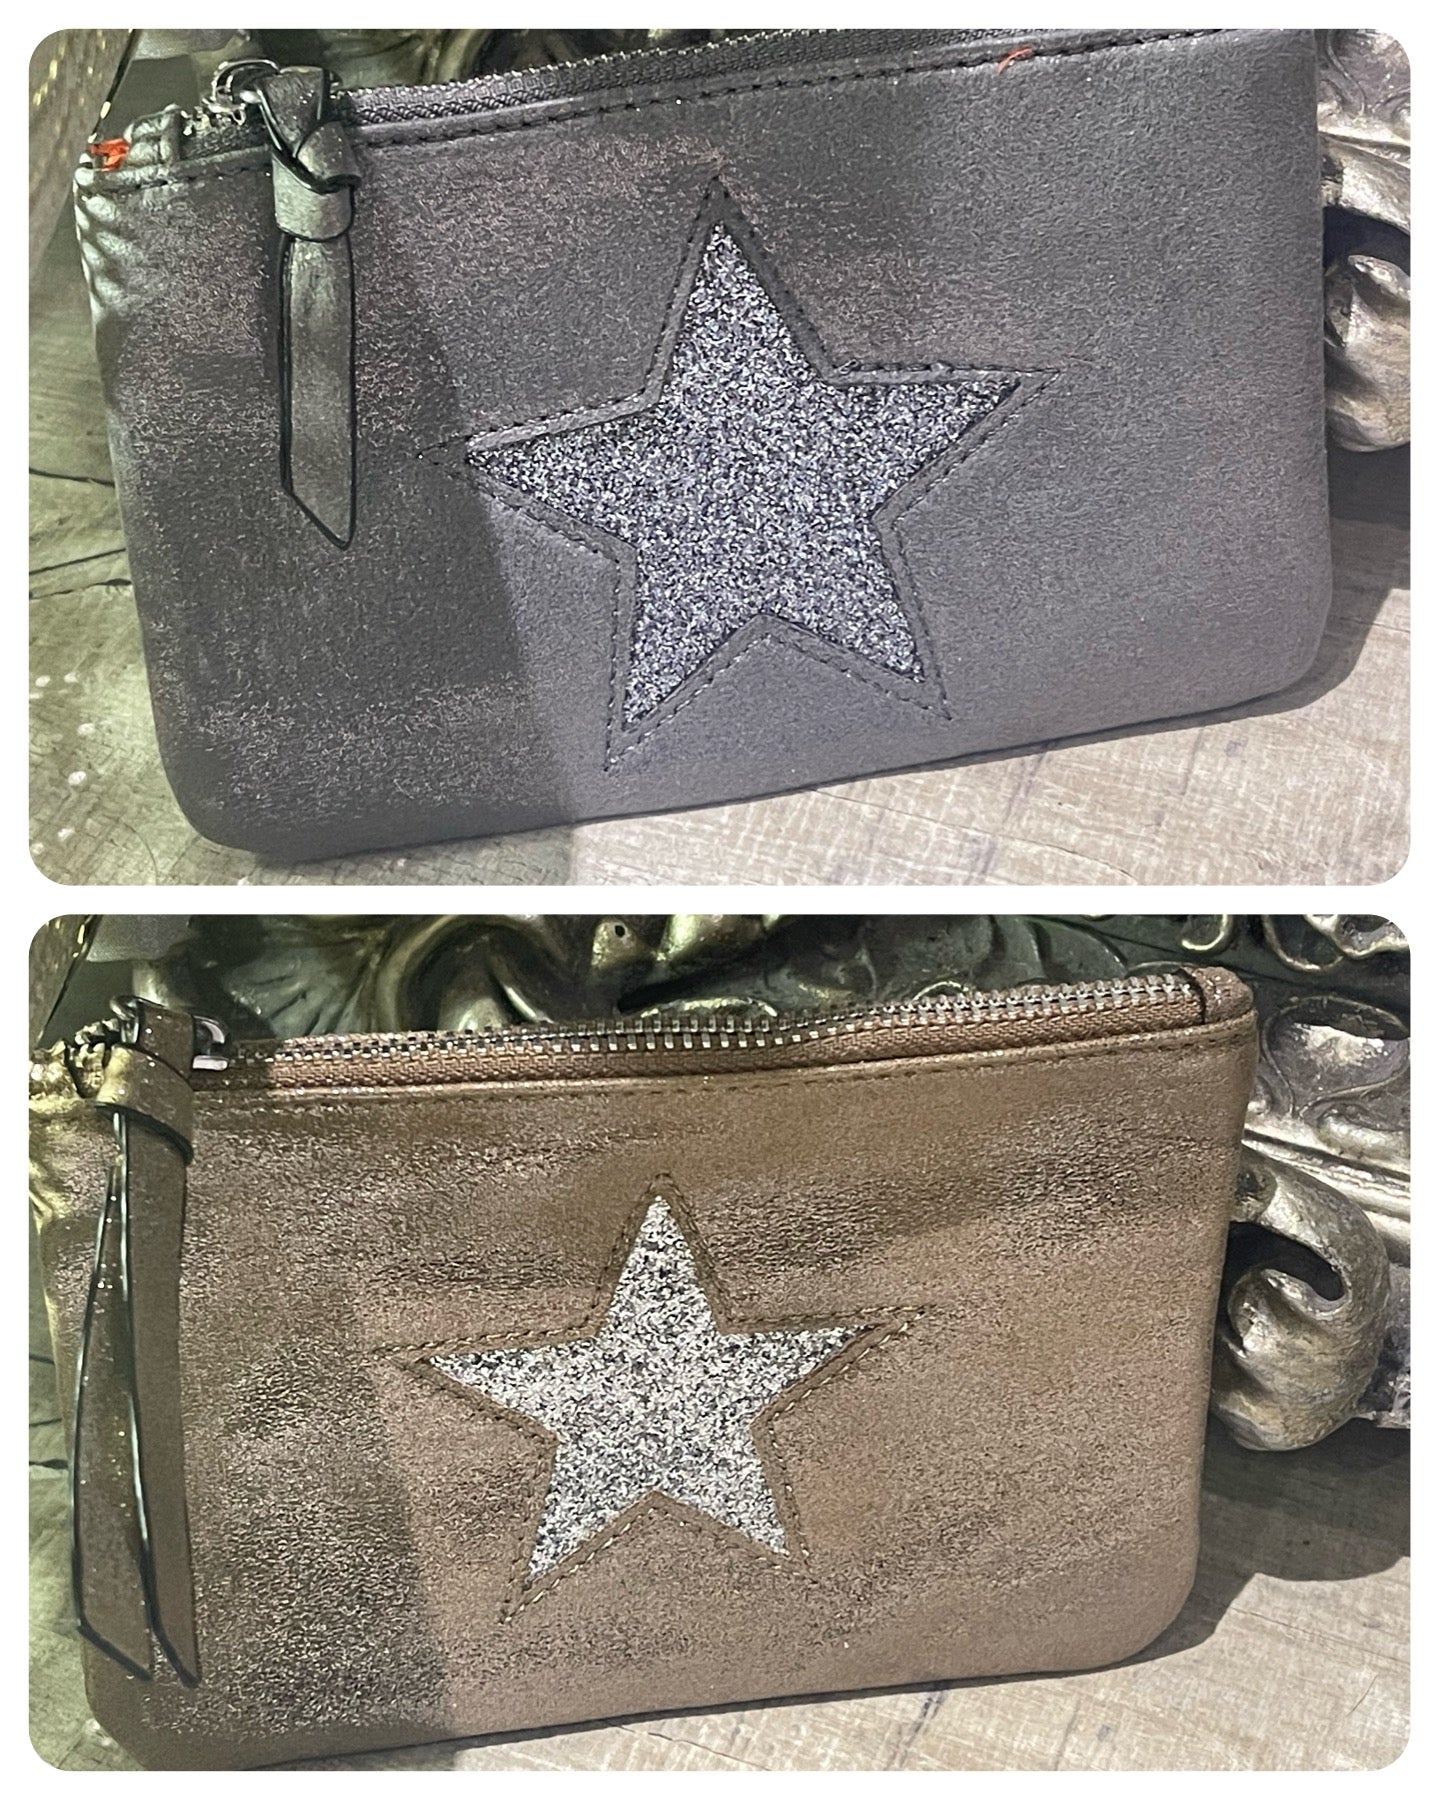 Large star purse